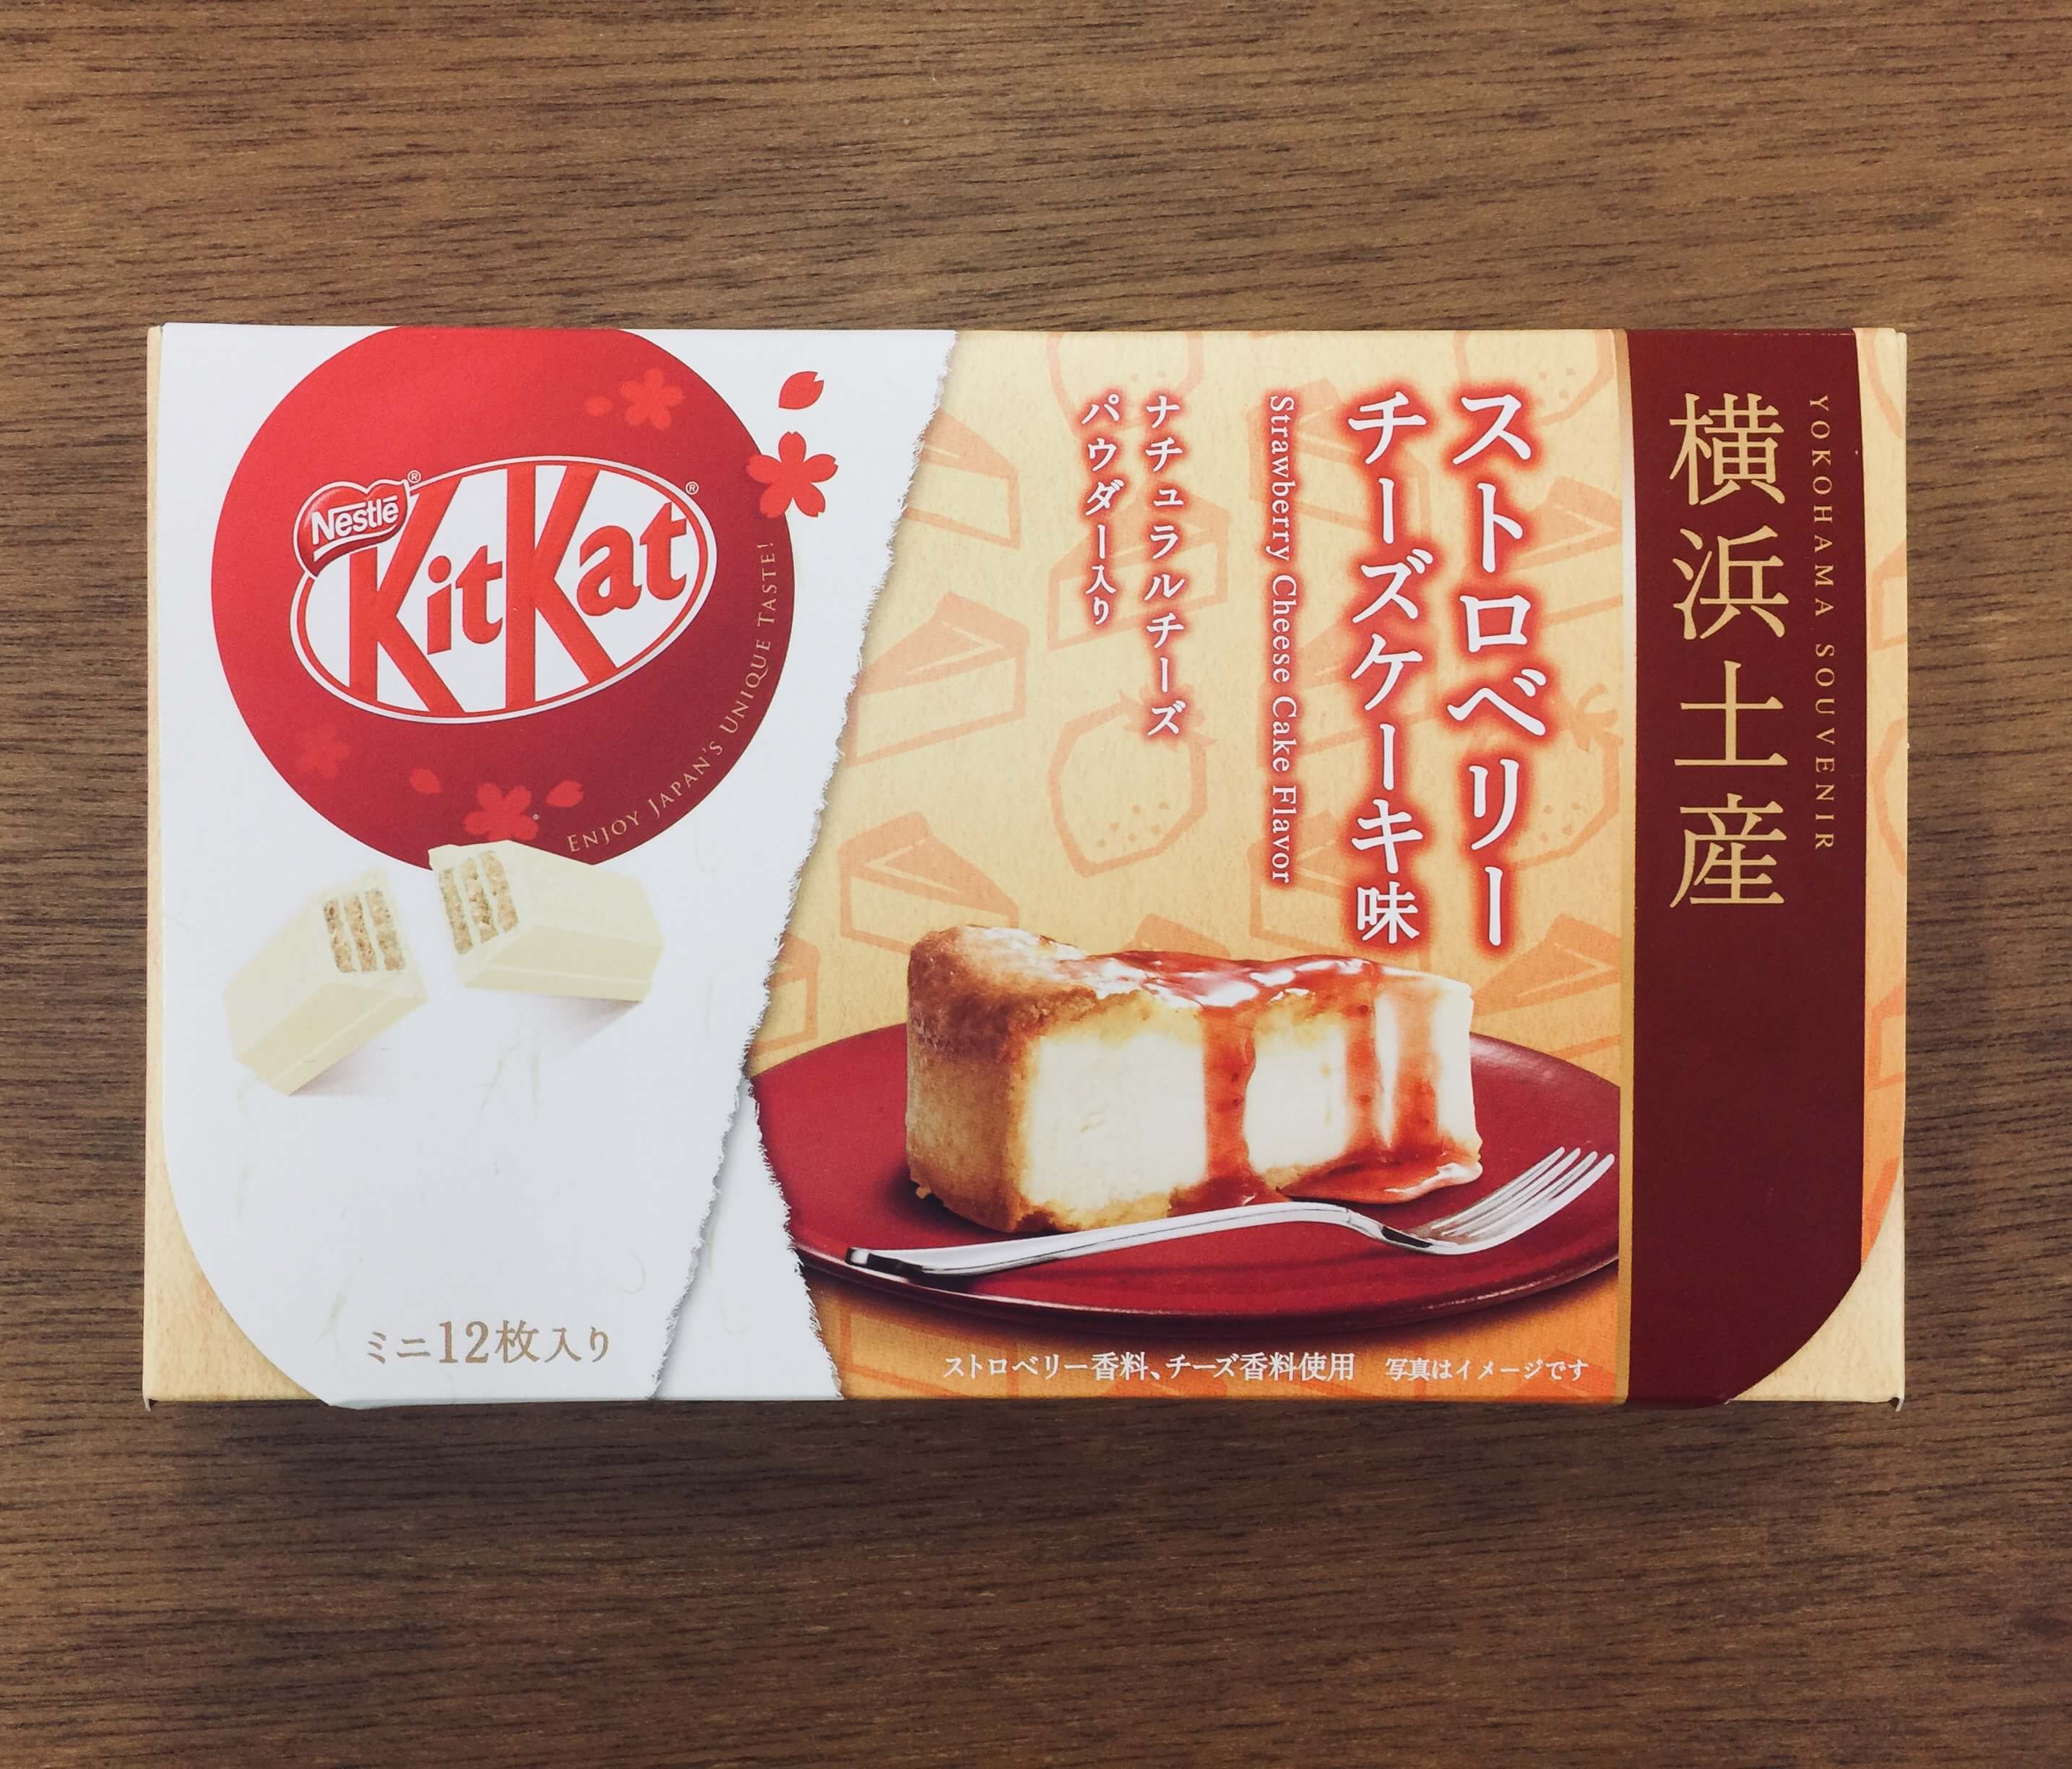 Japanese Strawberry Cheesecake Kit Kat box front